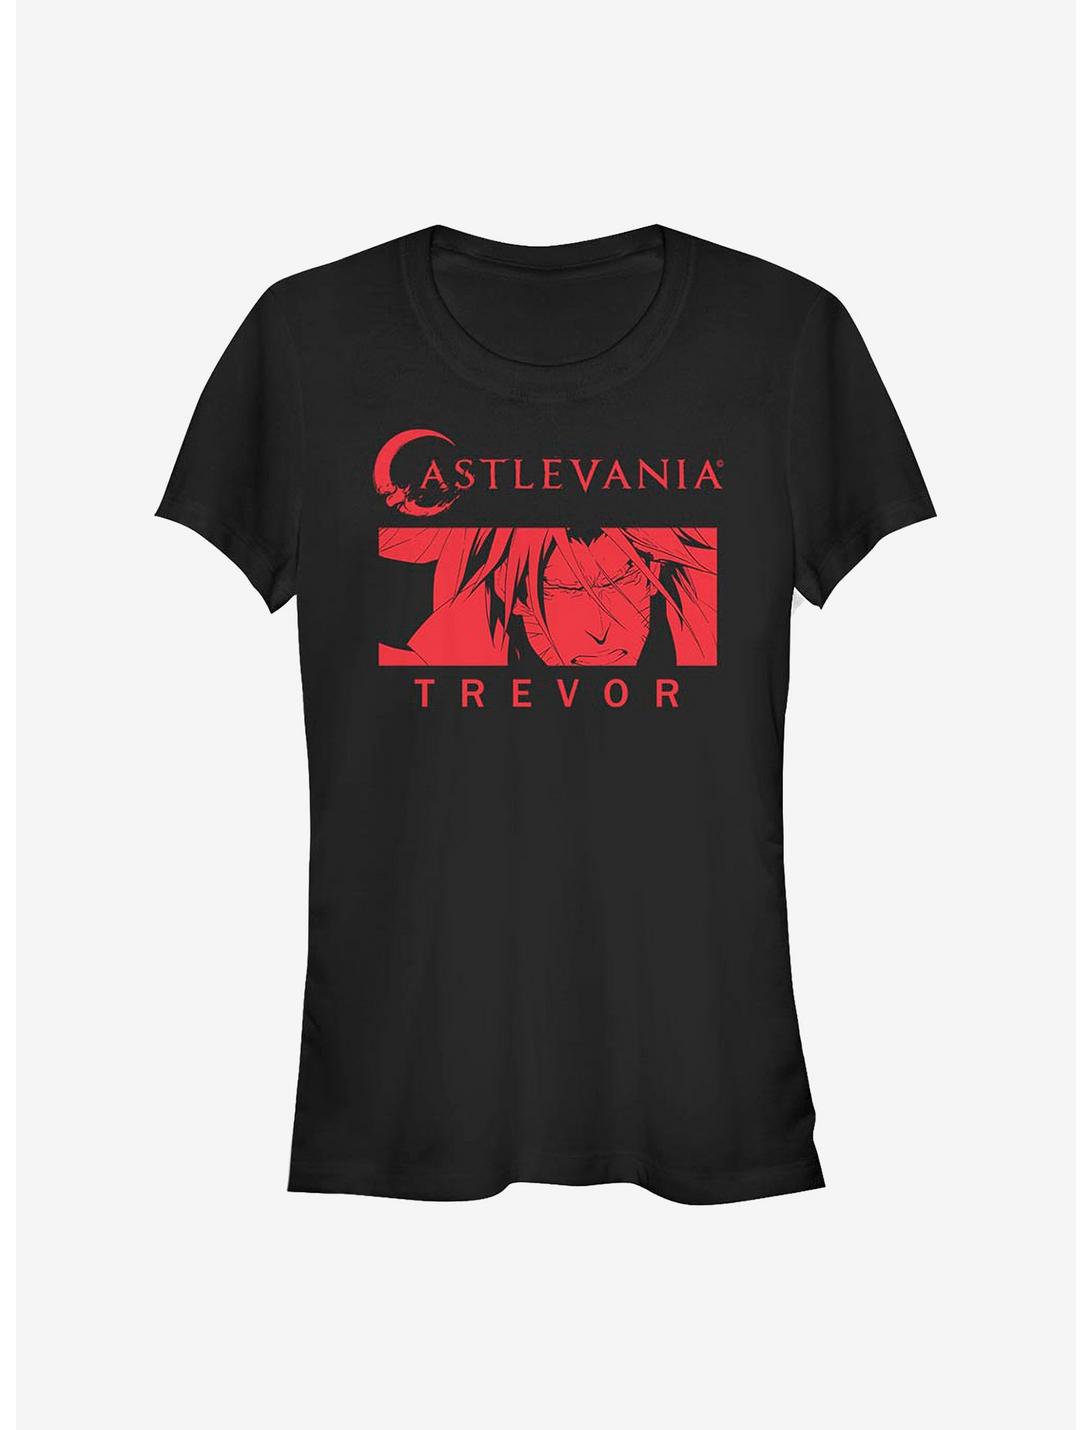 Castlevania Trevor Red Girls T-Shirt, BLACK, hi-res